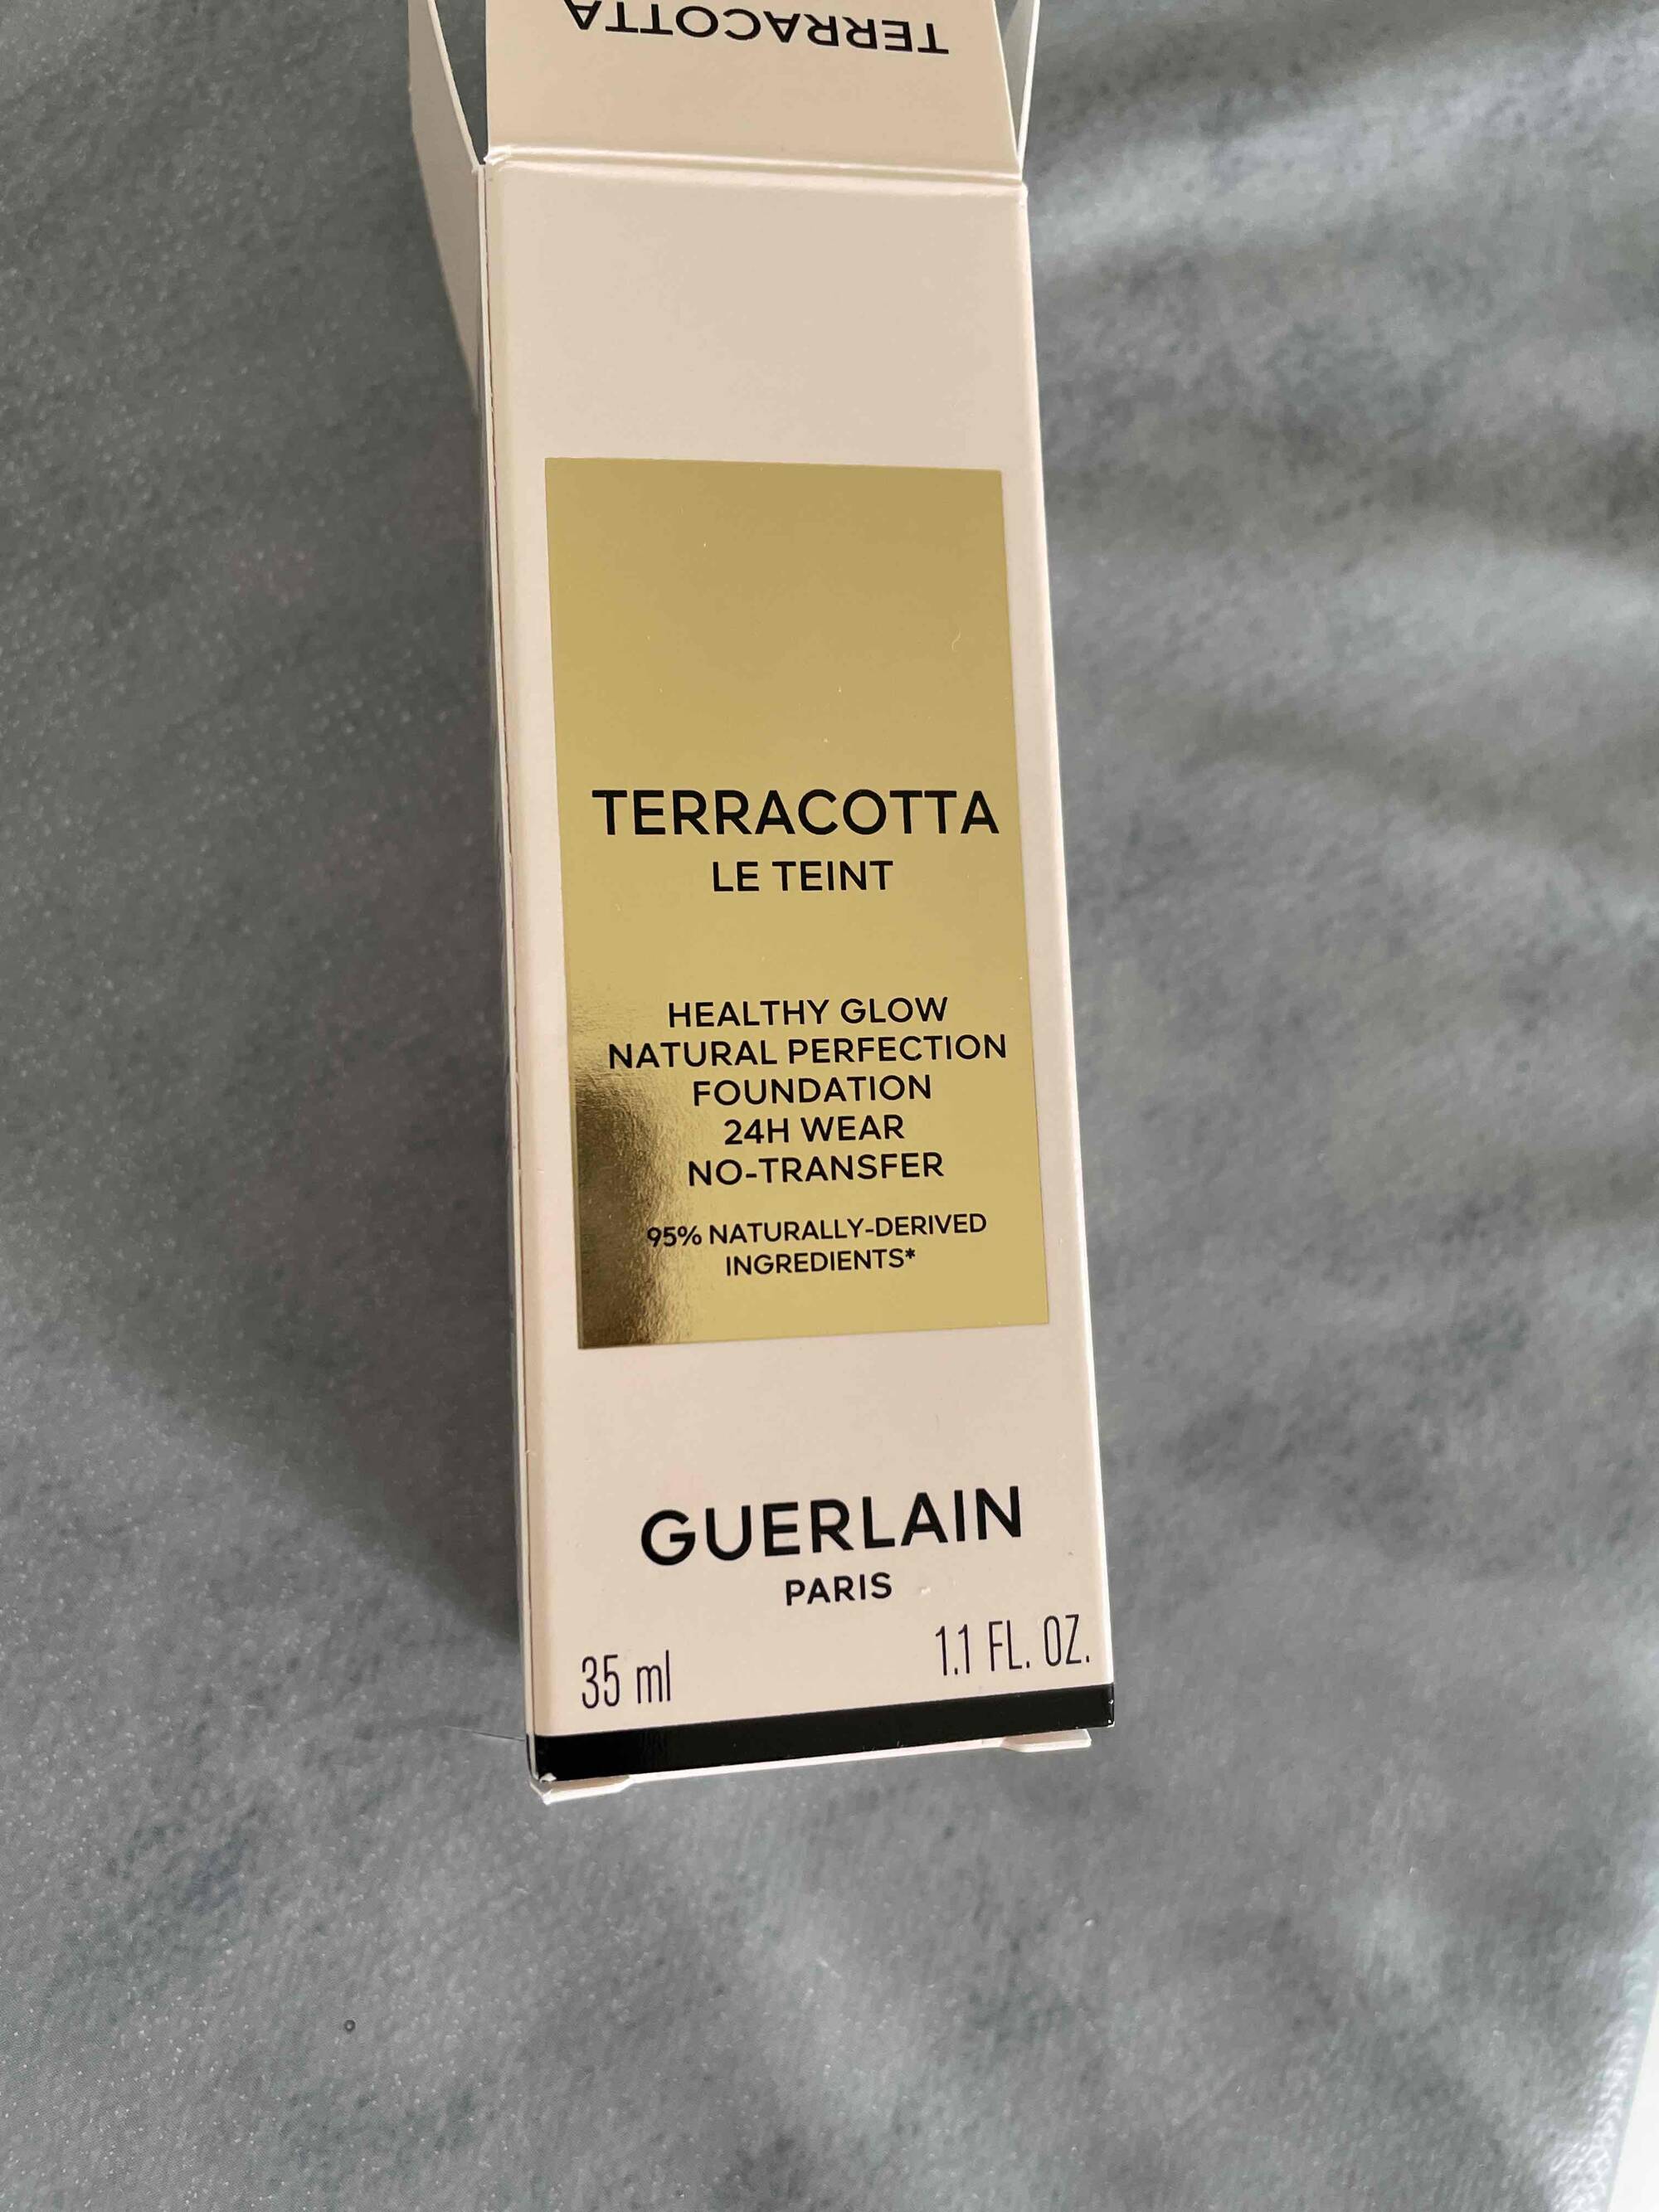 GUERLAIN - Terracotta le teint - Healthy glow natural perfection foundation 24h